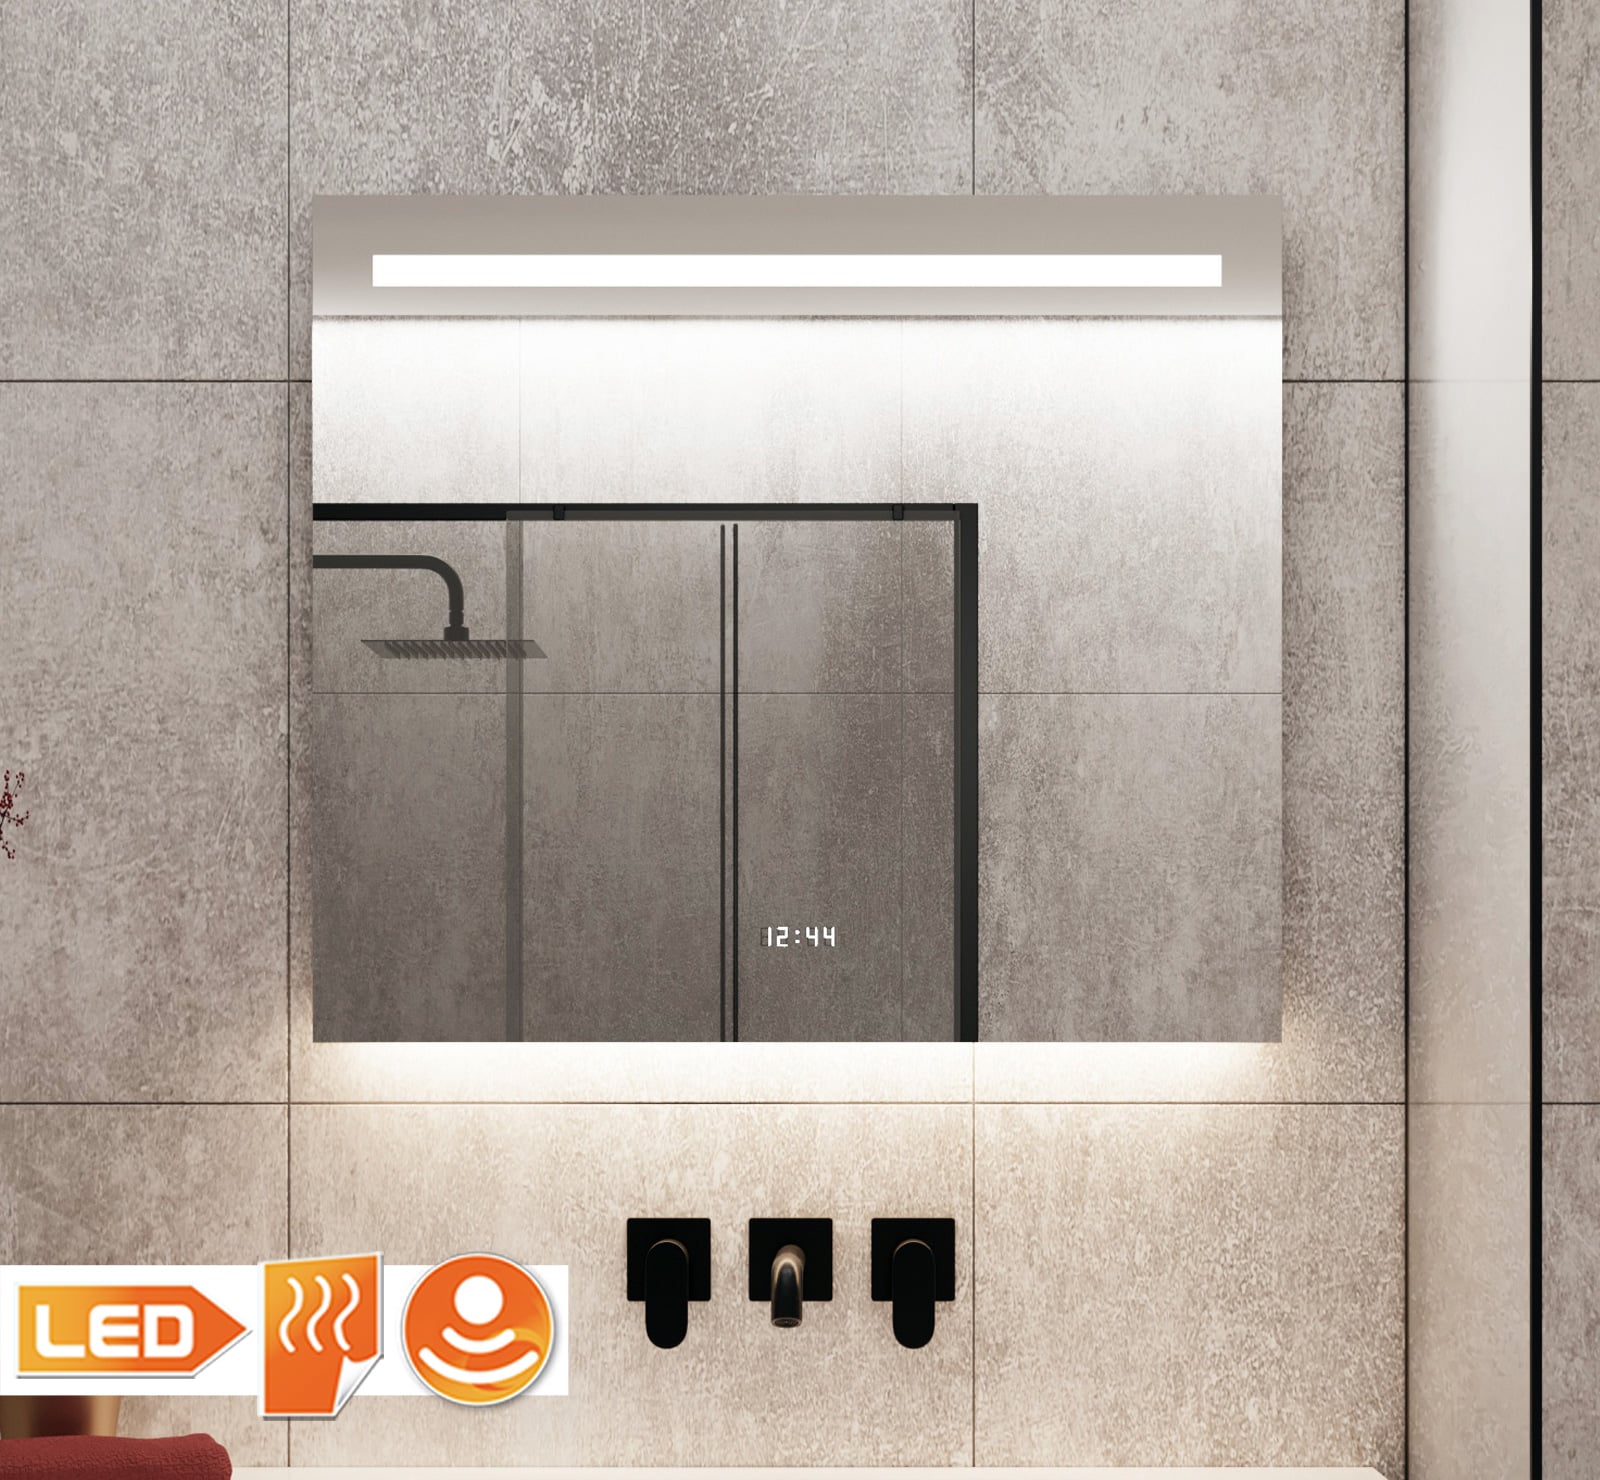 Fraaie 80 cm brede badkamer spiegel met klok verlichting en verwarming